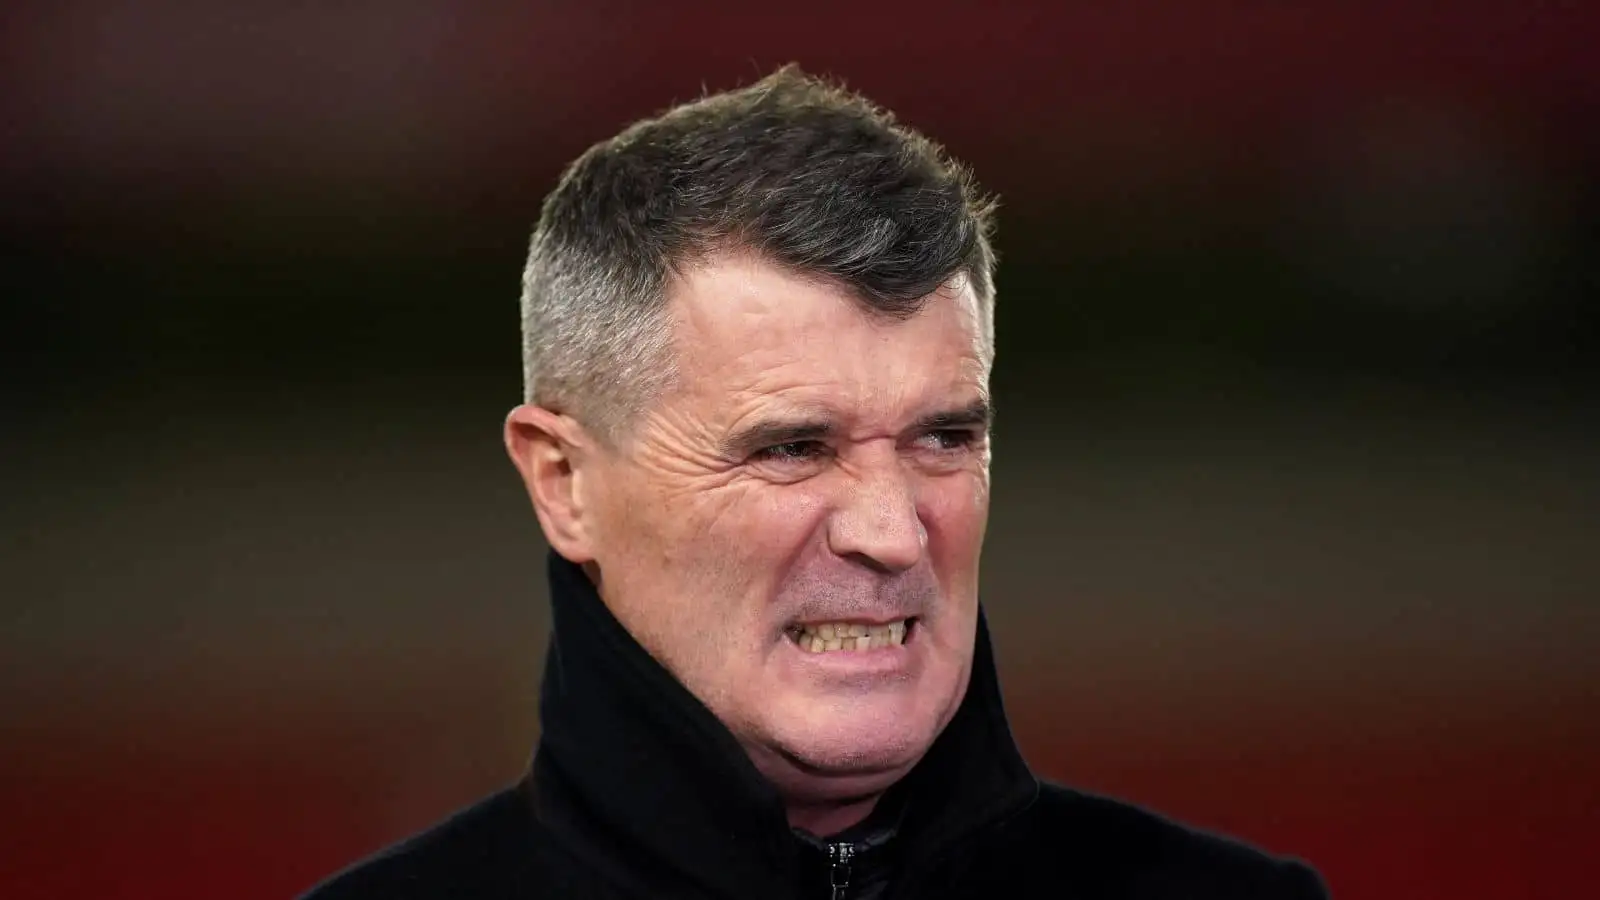 Roy Keane Sky Sports pundit